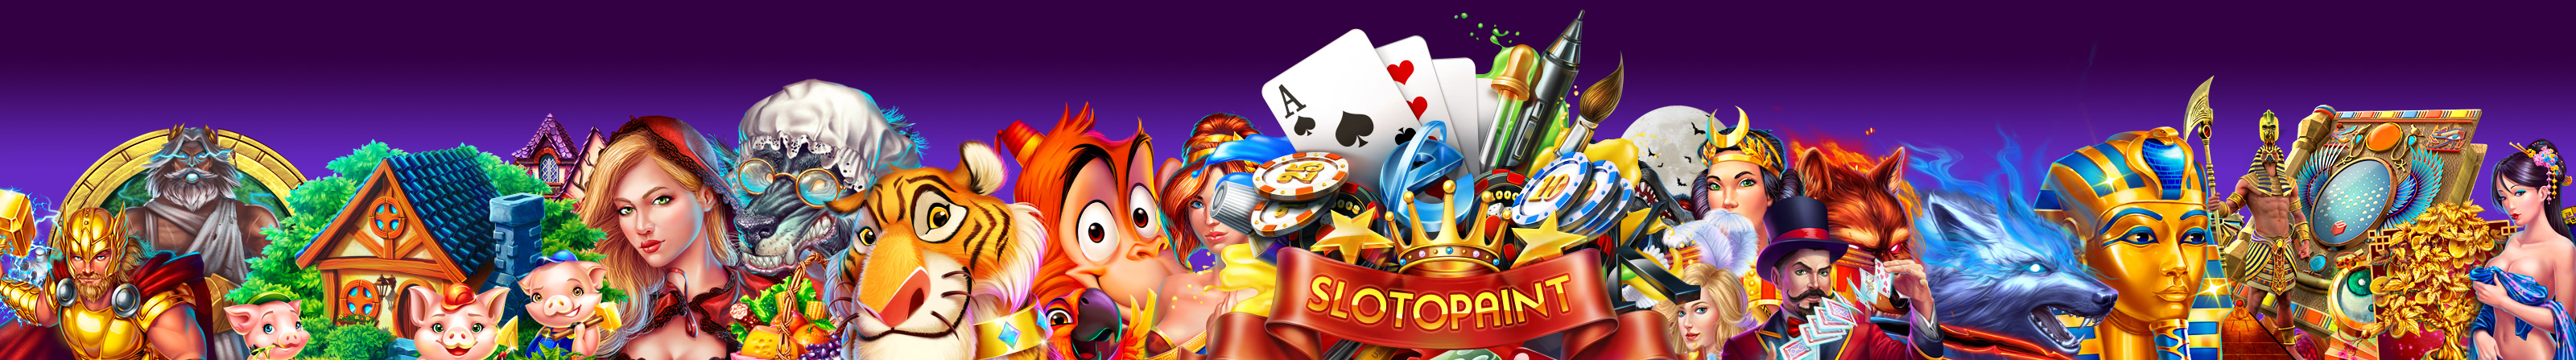 Slotopaint Game Design Studio's profile banner